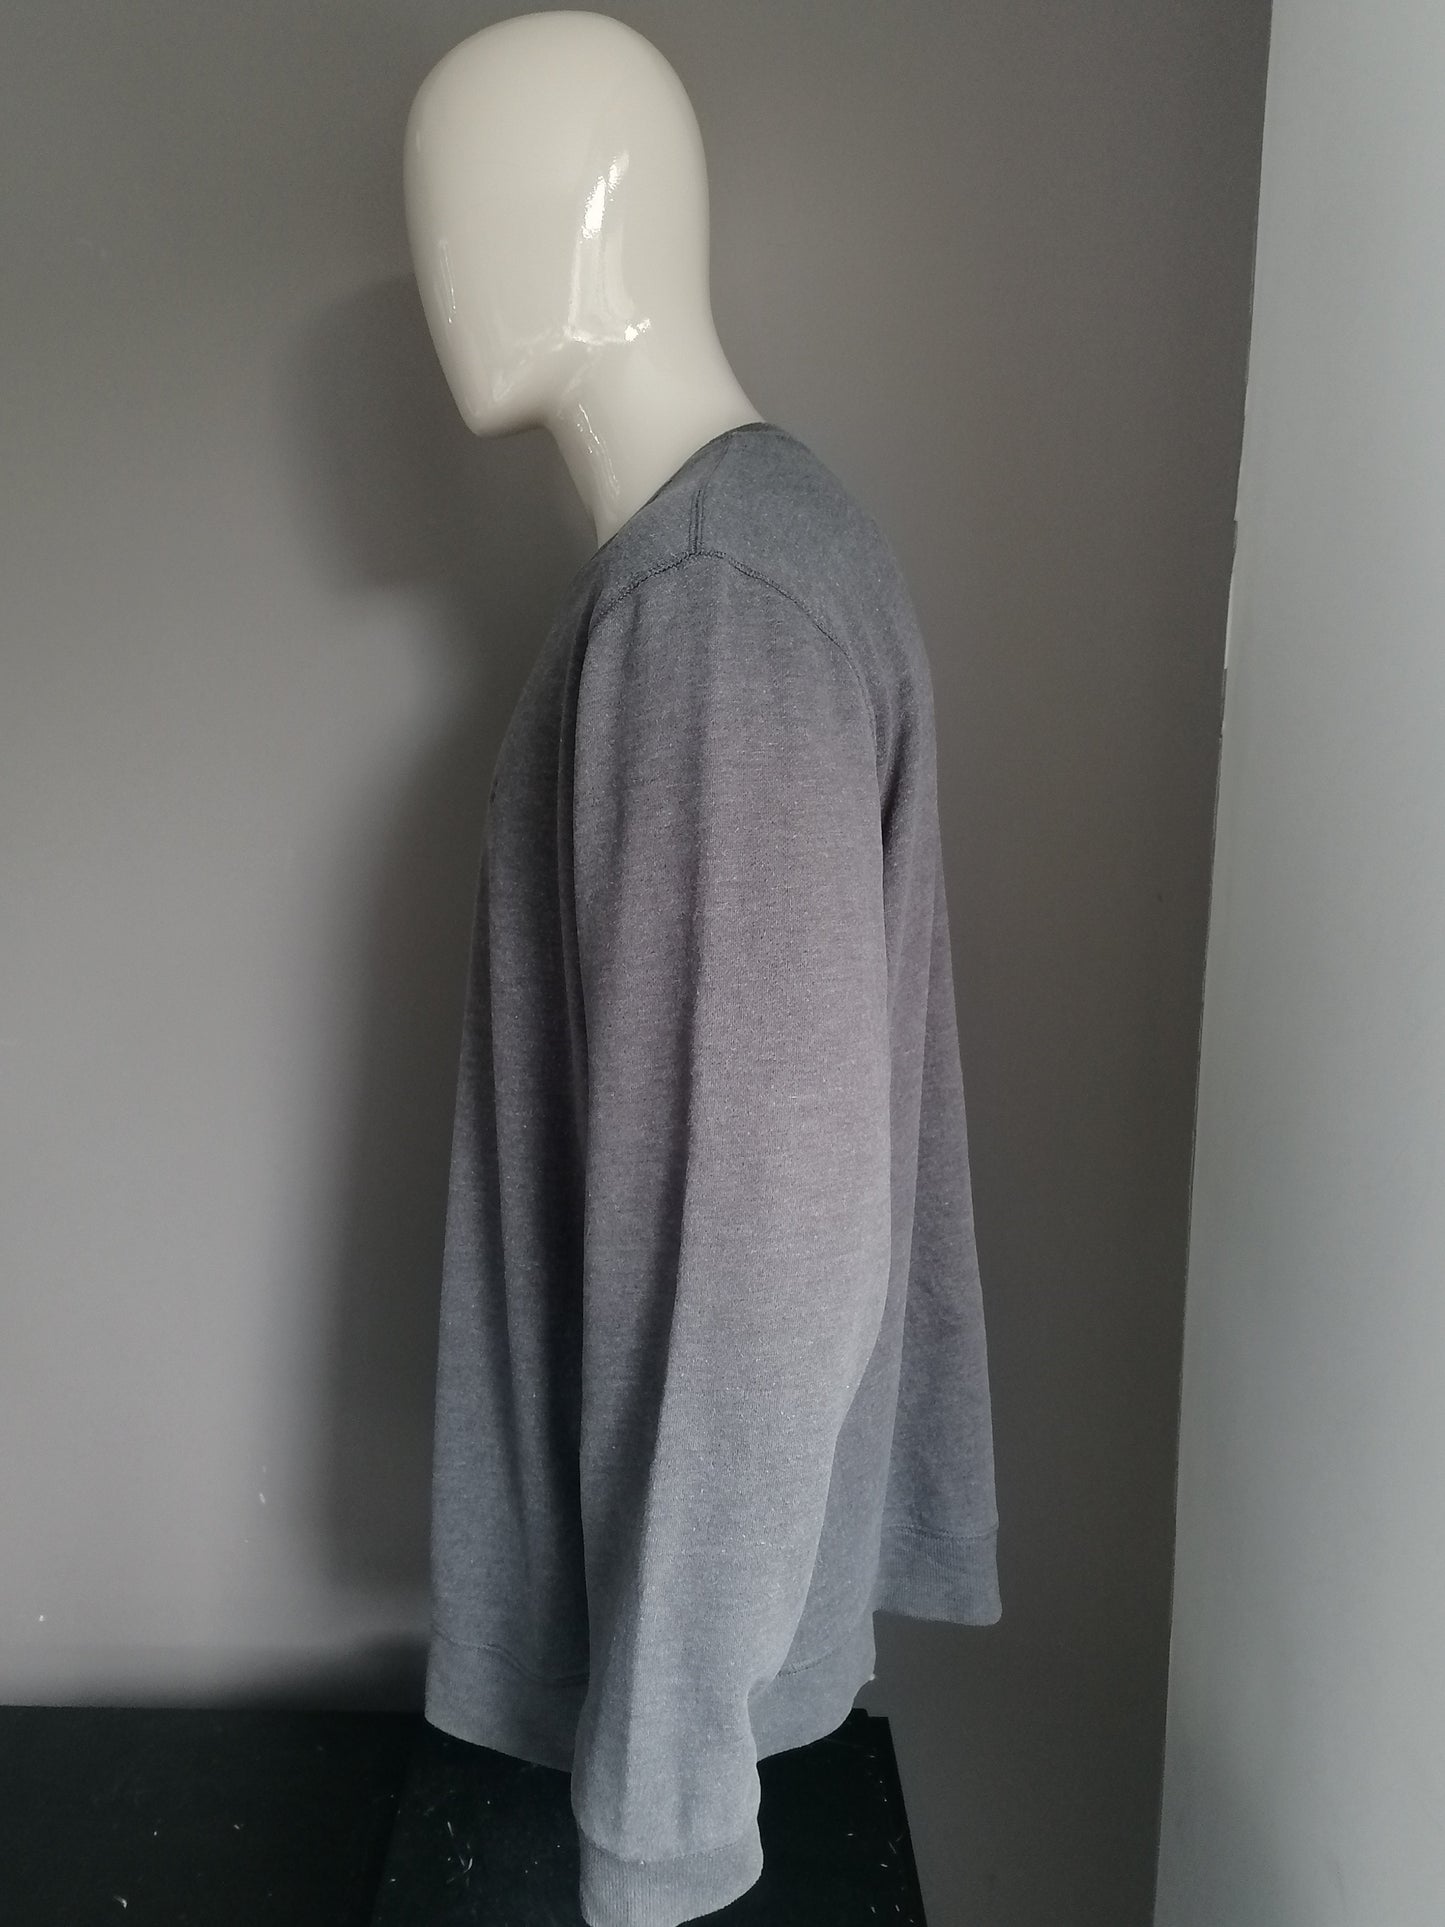 Izod casual sweater. Dark gray colored. Size XXL / 2XL.